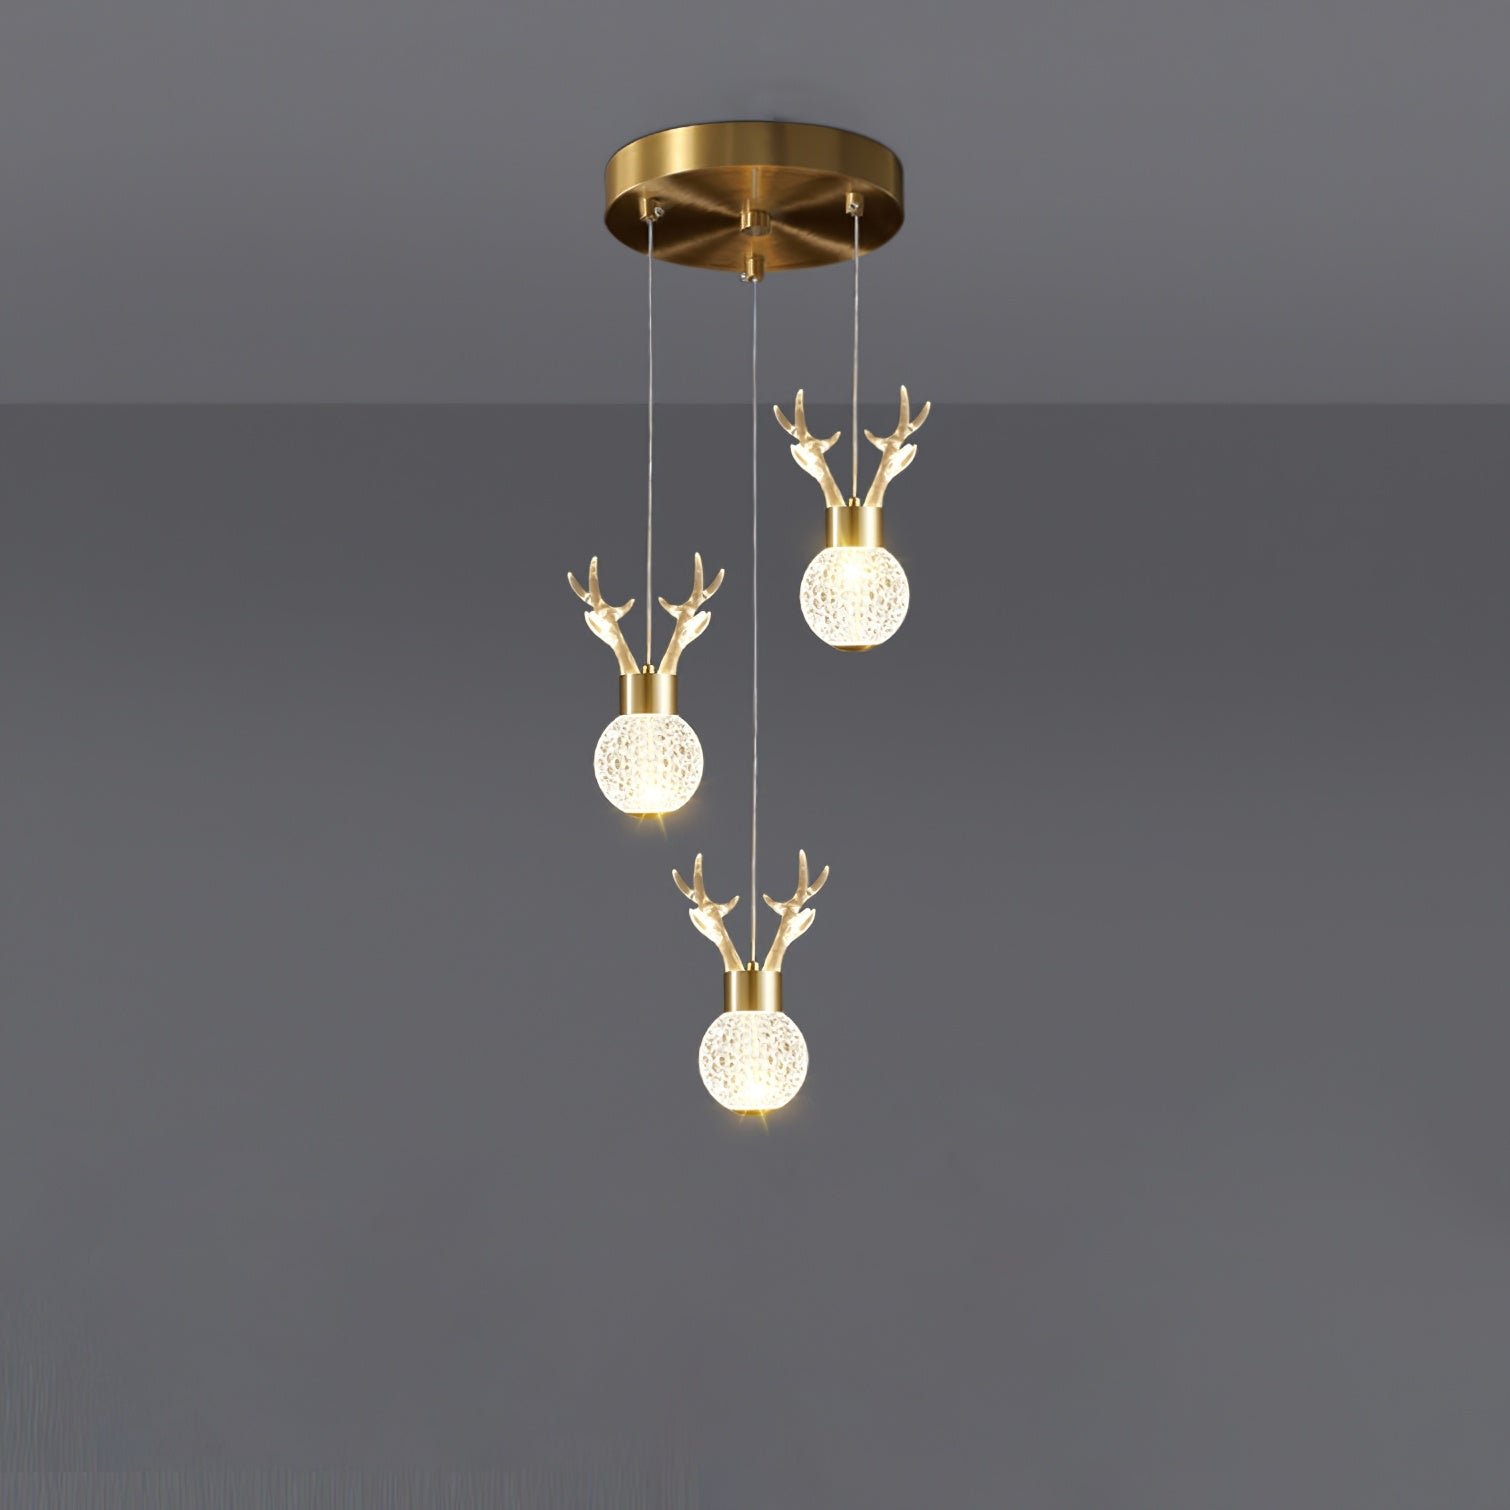 Little Deer Pendant Lamp with 3 Headlights, 7.8" Diameter x 78.7" Height (20cm Diameter x 200cm Height), Textured Finish, Illuminated in Cool White